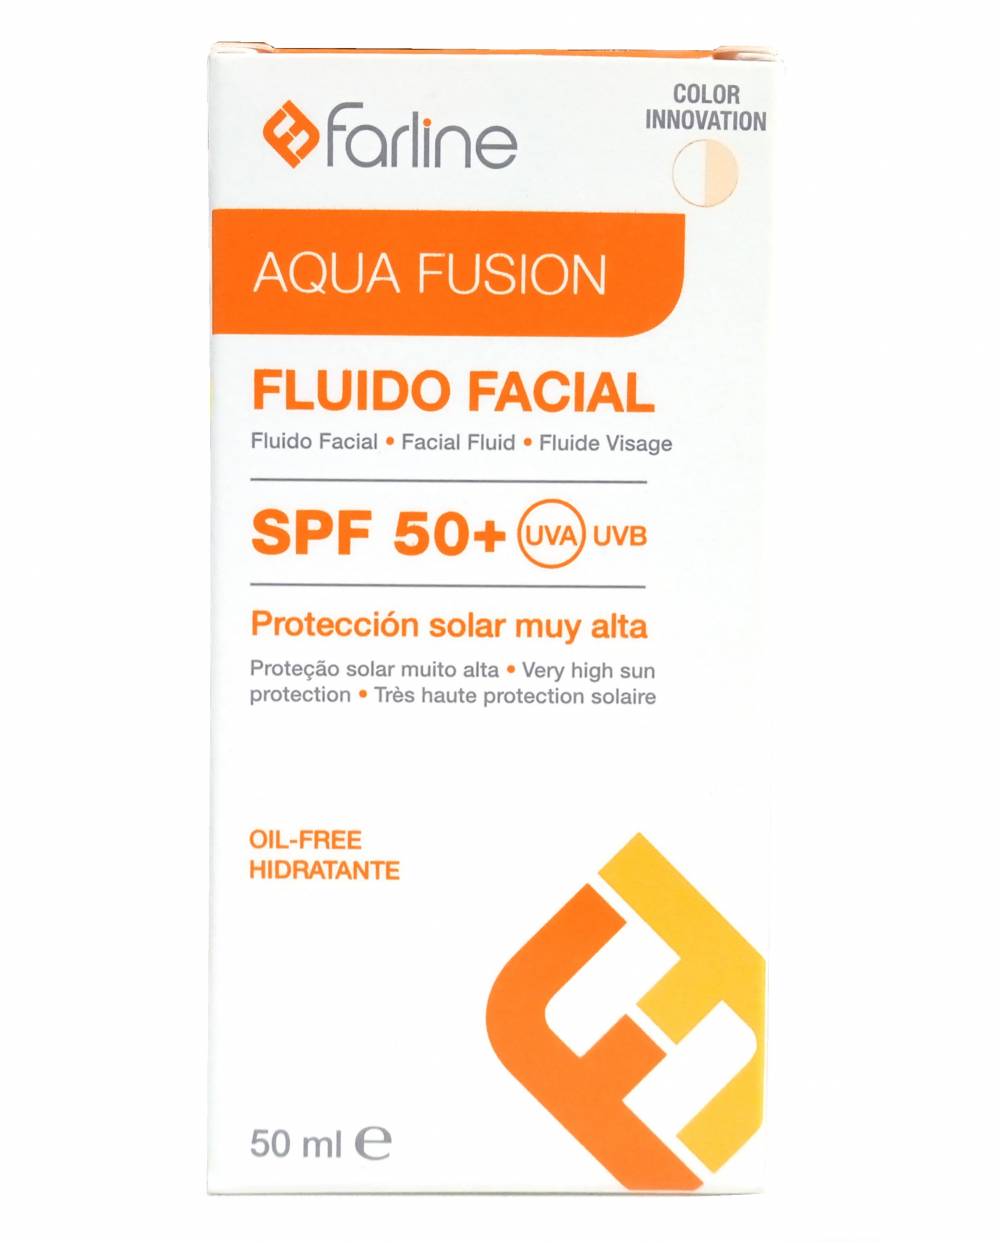 Solar Farline - Fluido Facial lSpf 50+ - Aqua fusion con color - 50 ml